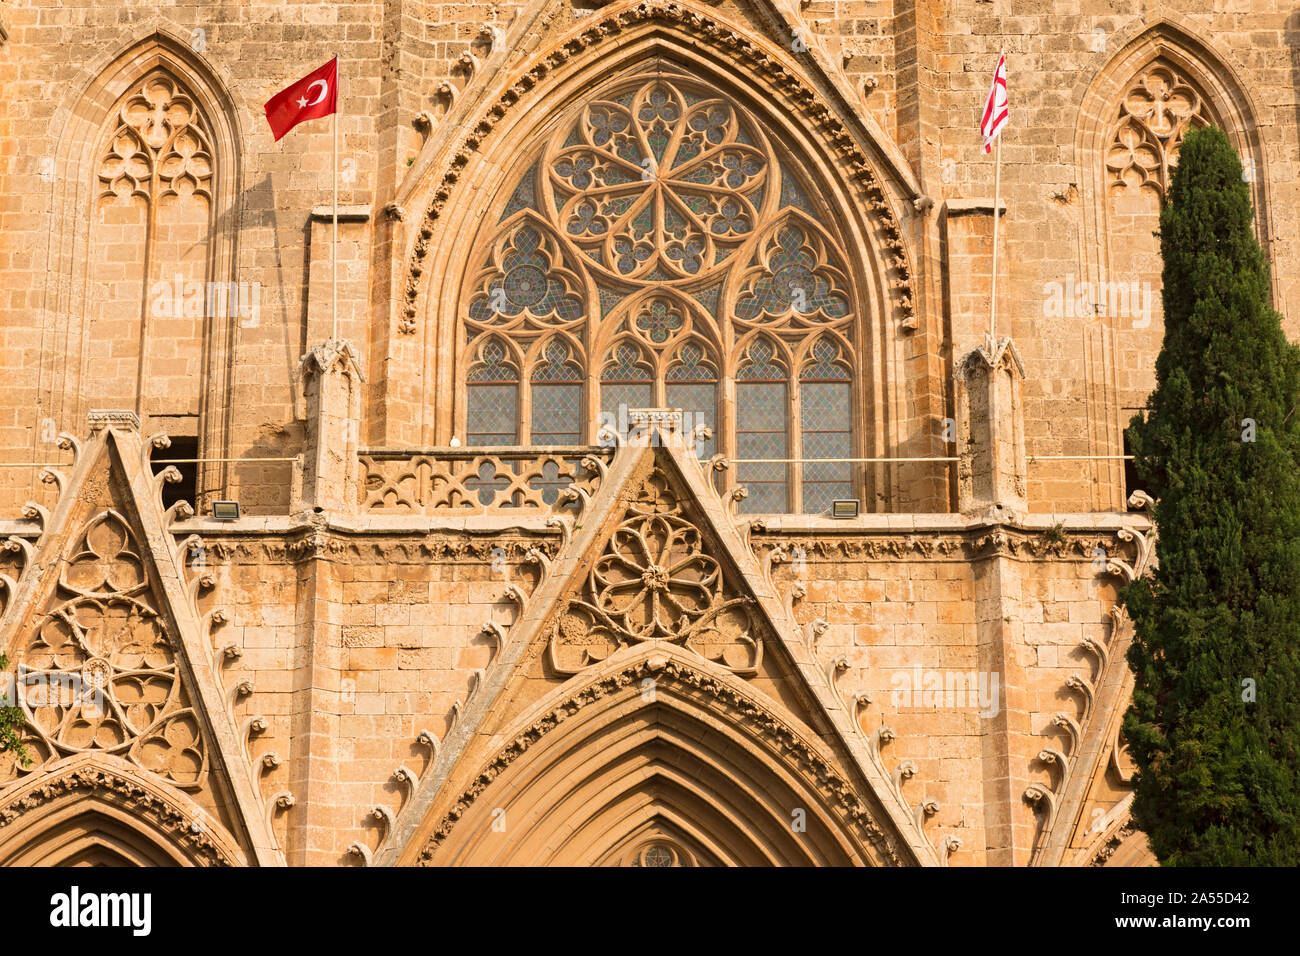 Nikolaus Kathedrale, Famagusta, Türkische Republik Nordzypern Foto de stock